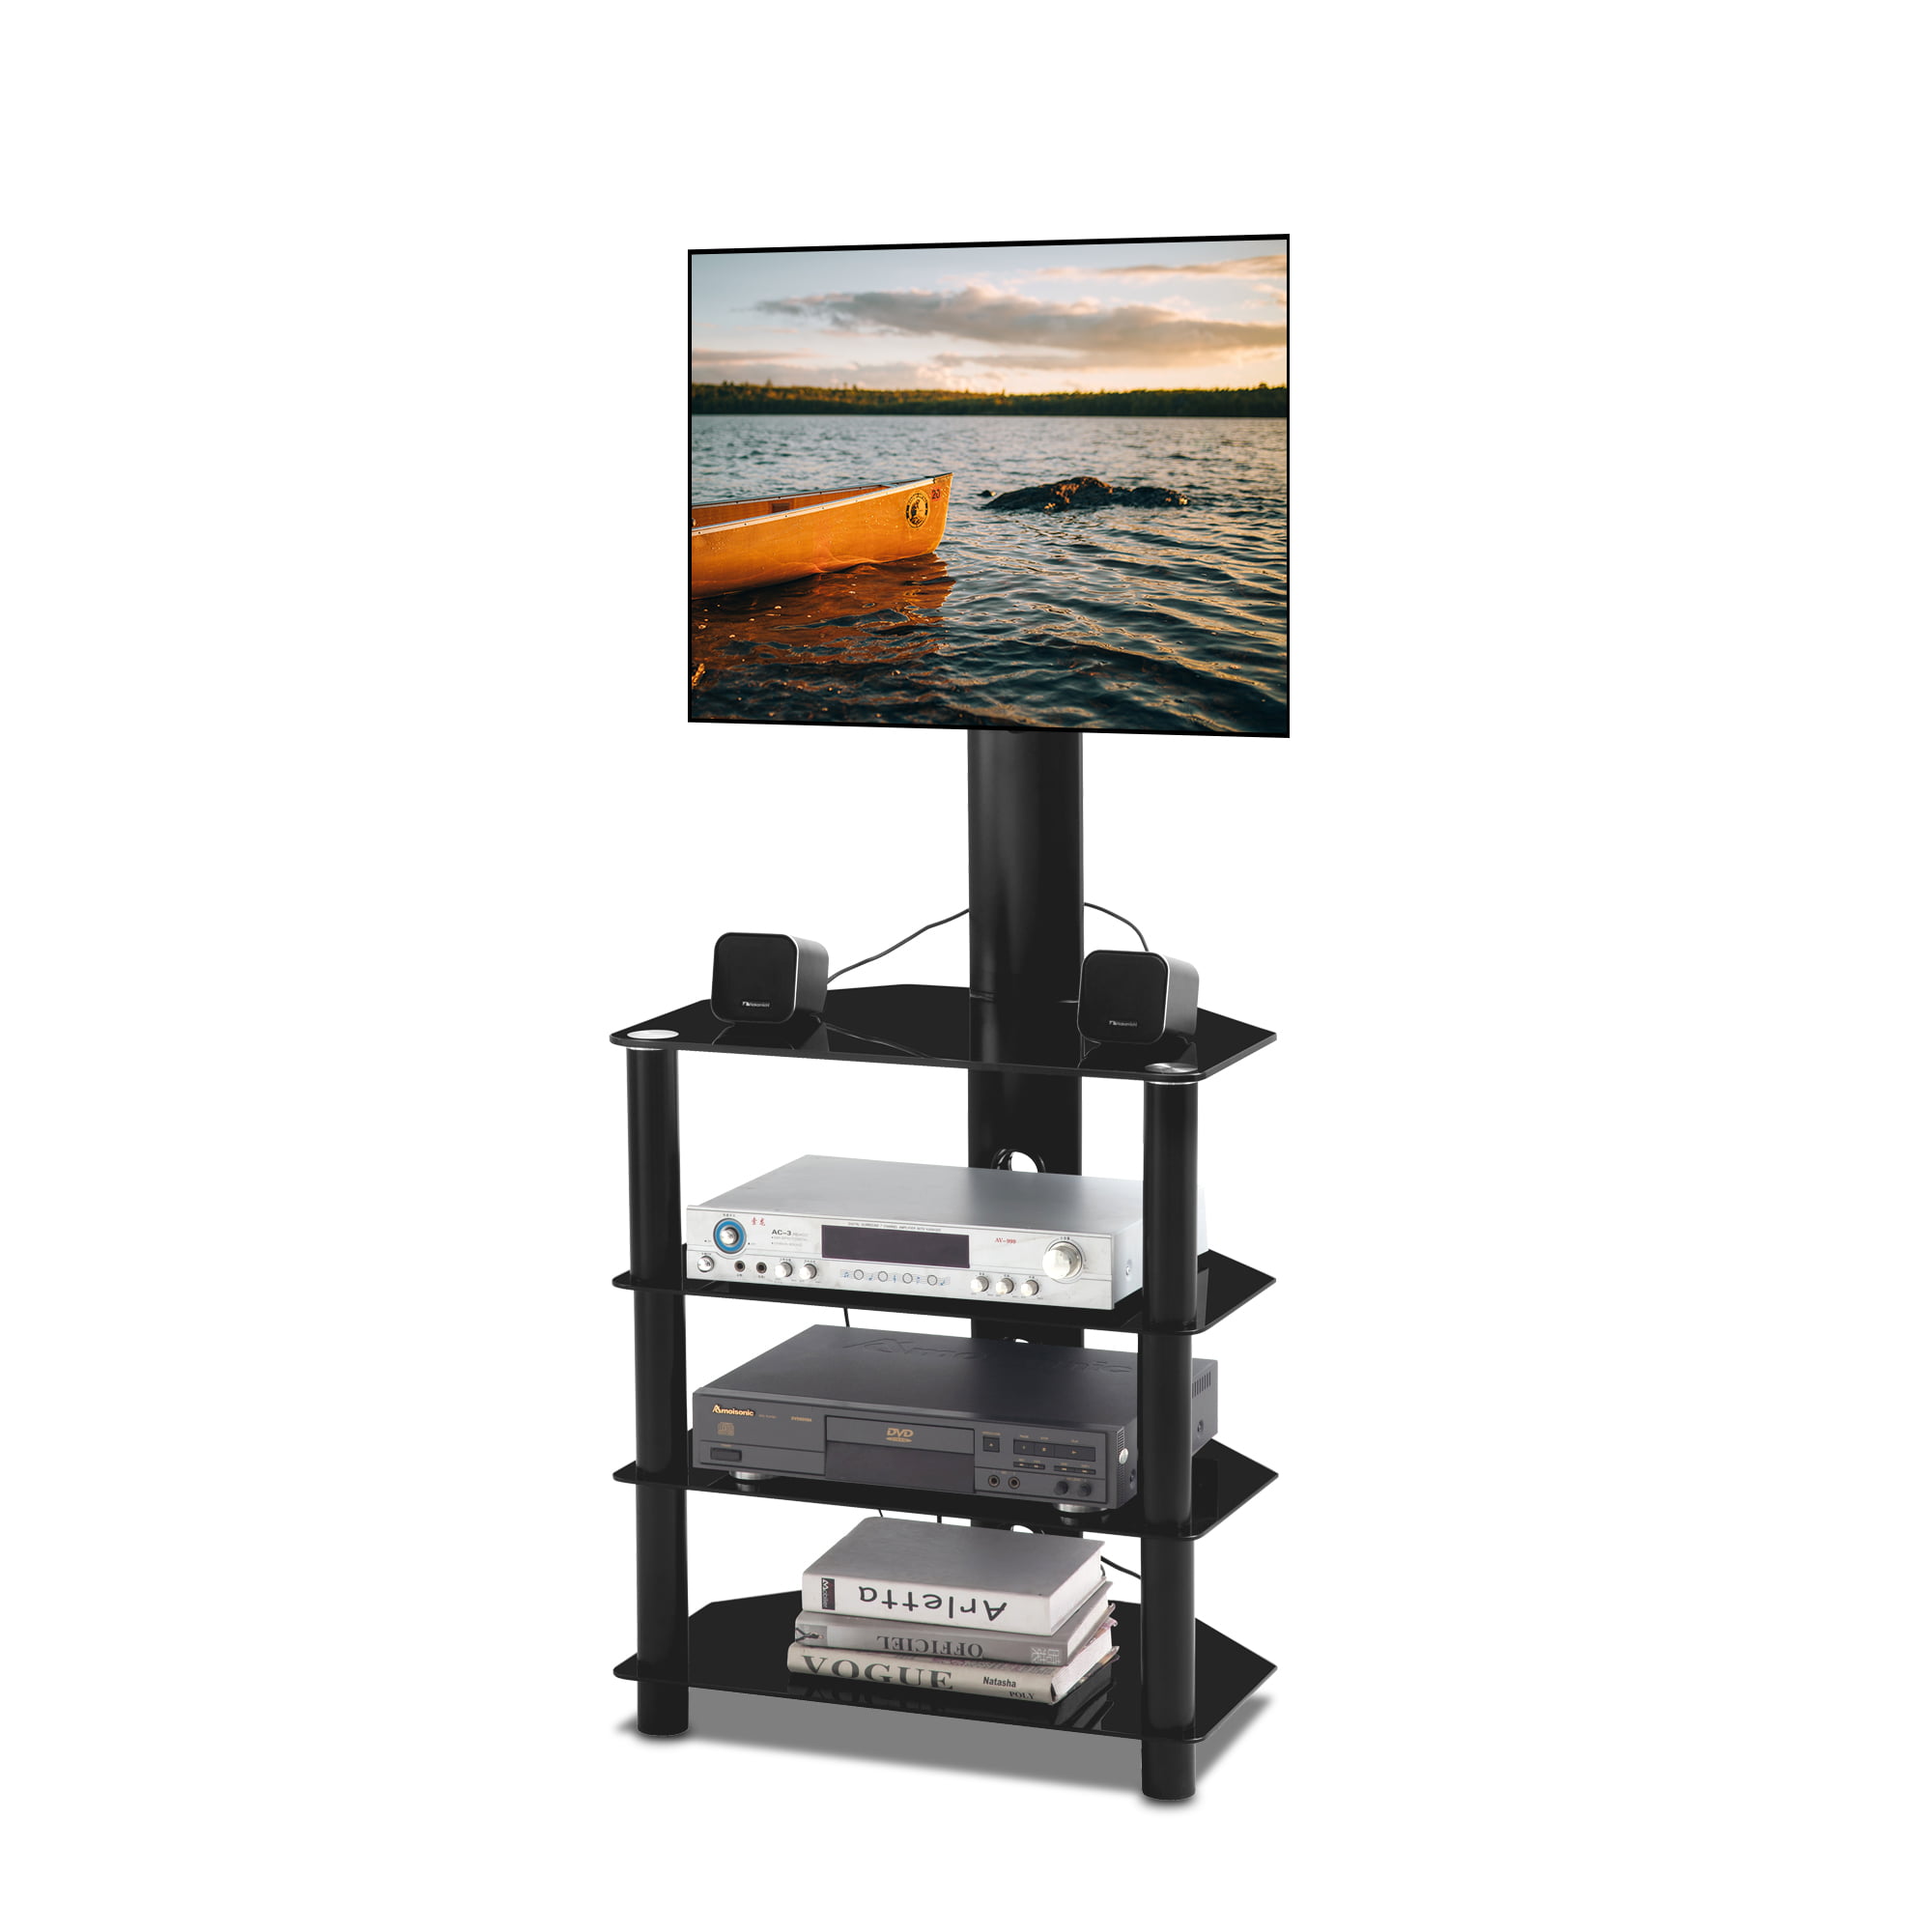 Details about   Floor Swivel TV Stand Tempered Glass Adjustable Height Black Living Room Modern 